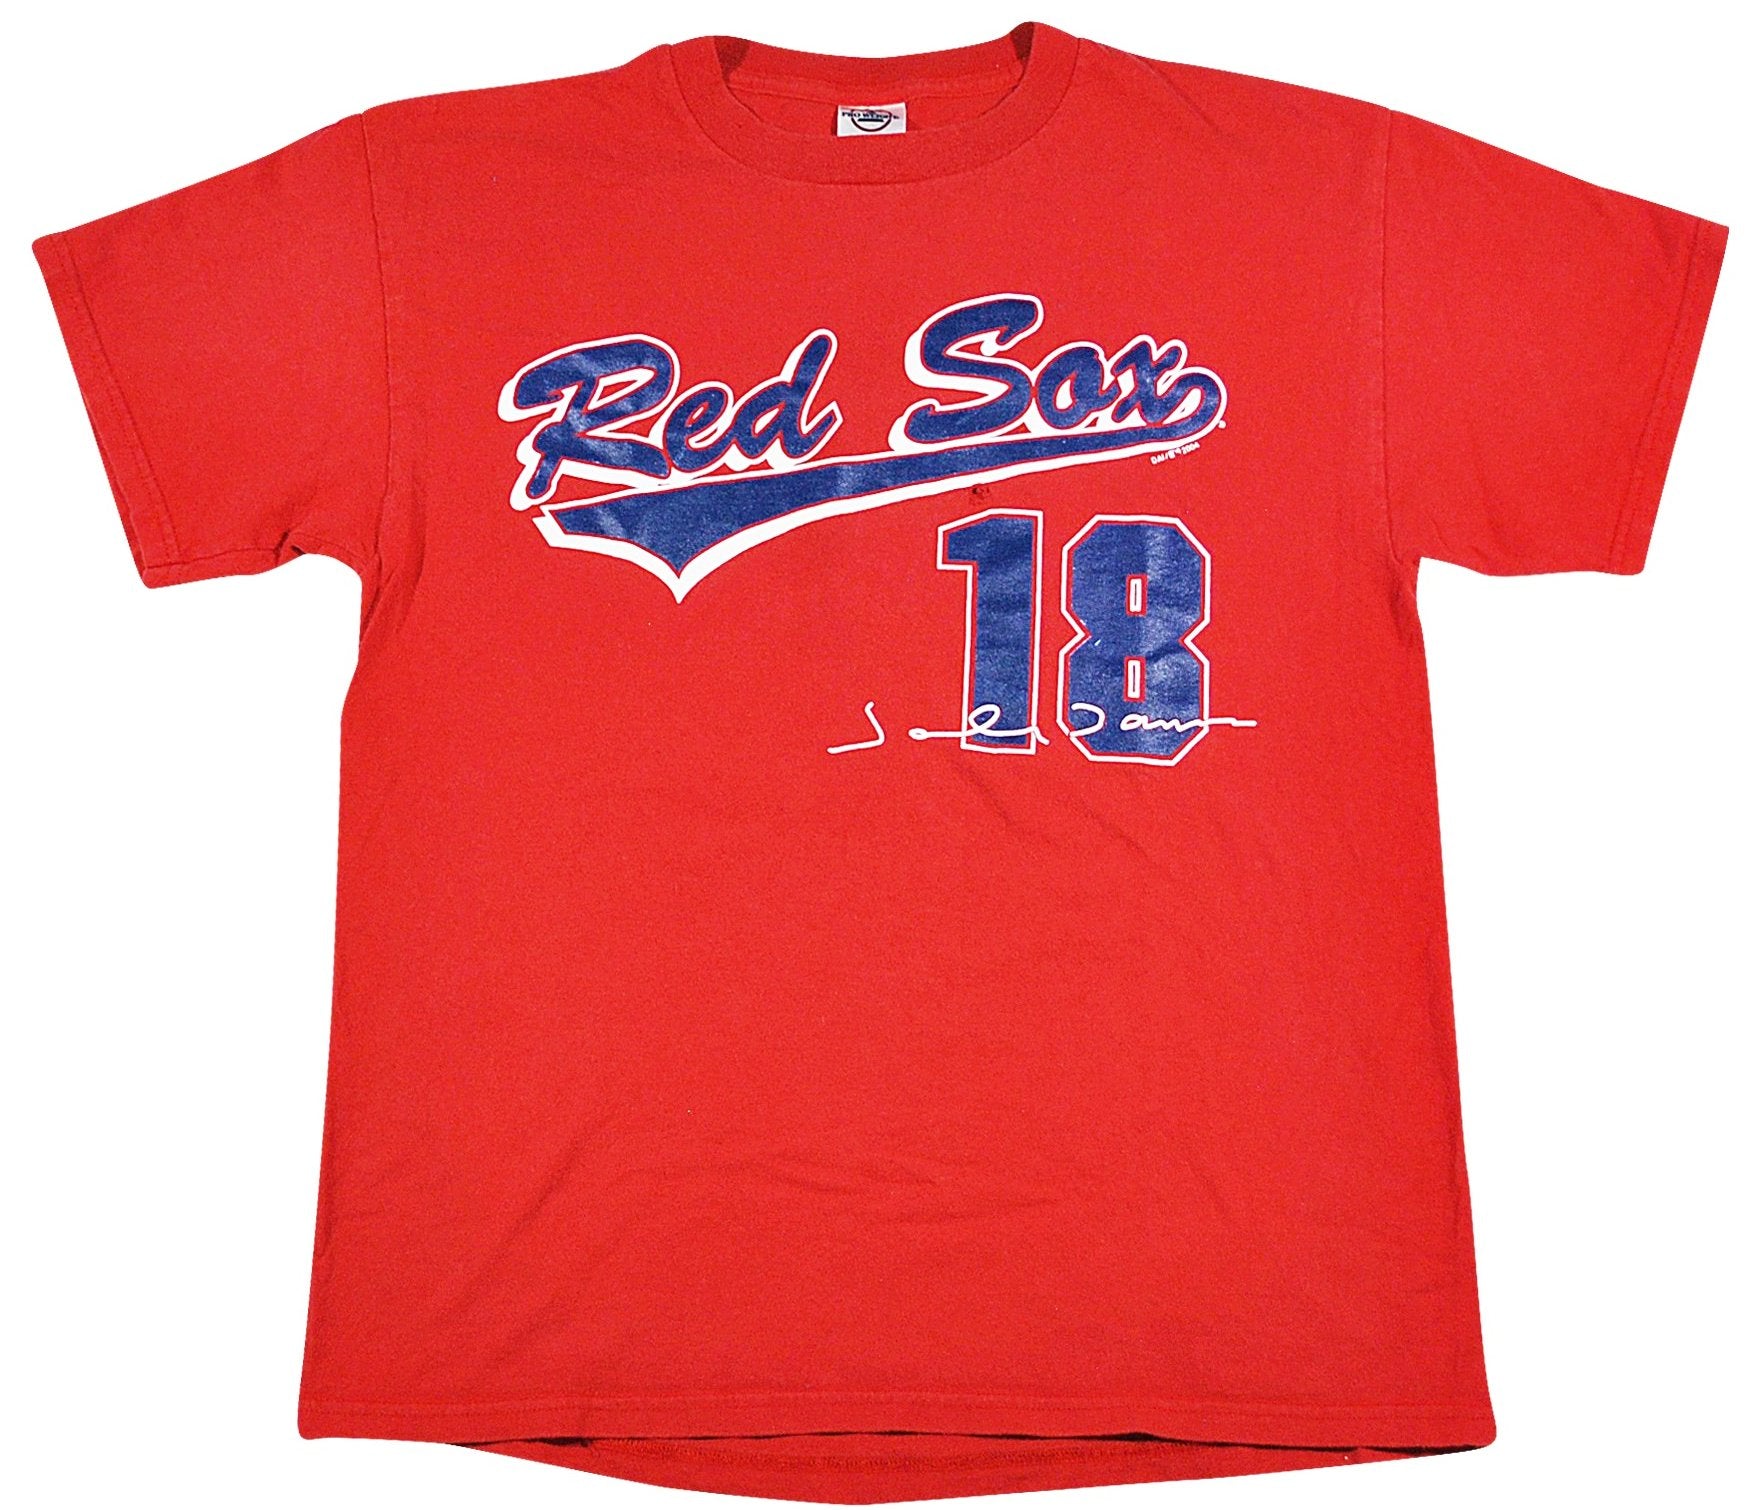 Boston Red Sox 2004 World Series Champions Tee Shirt MLB 